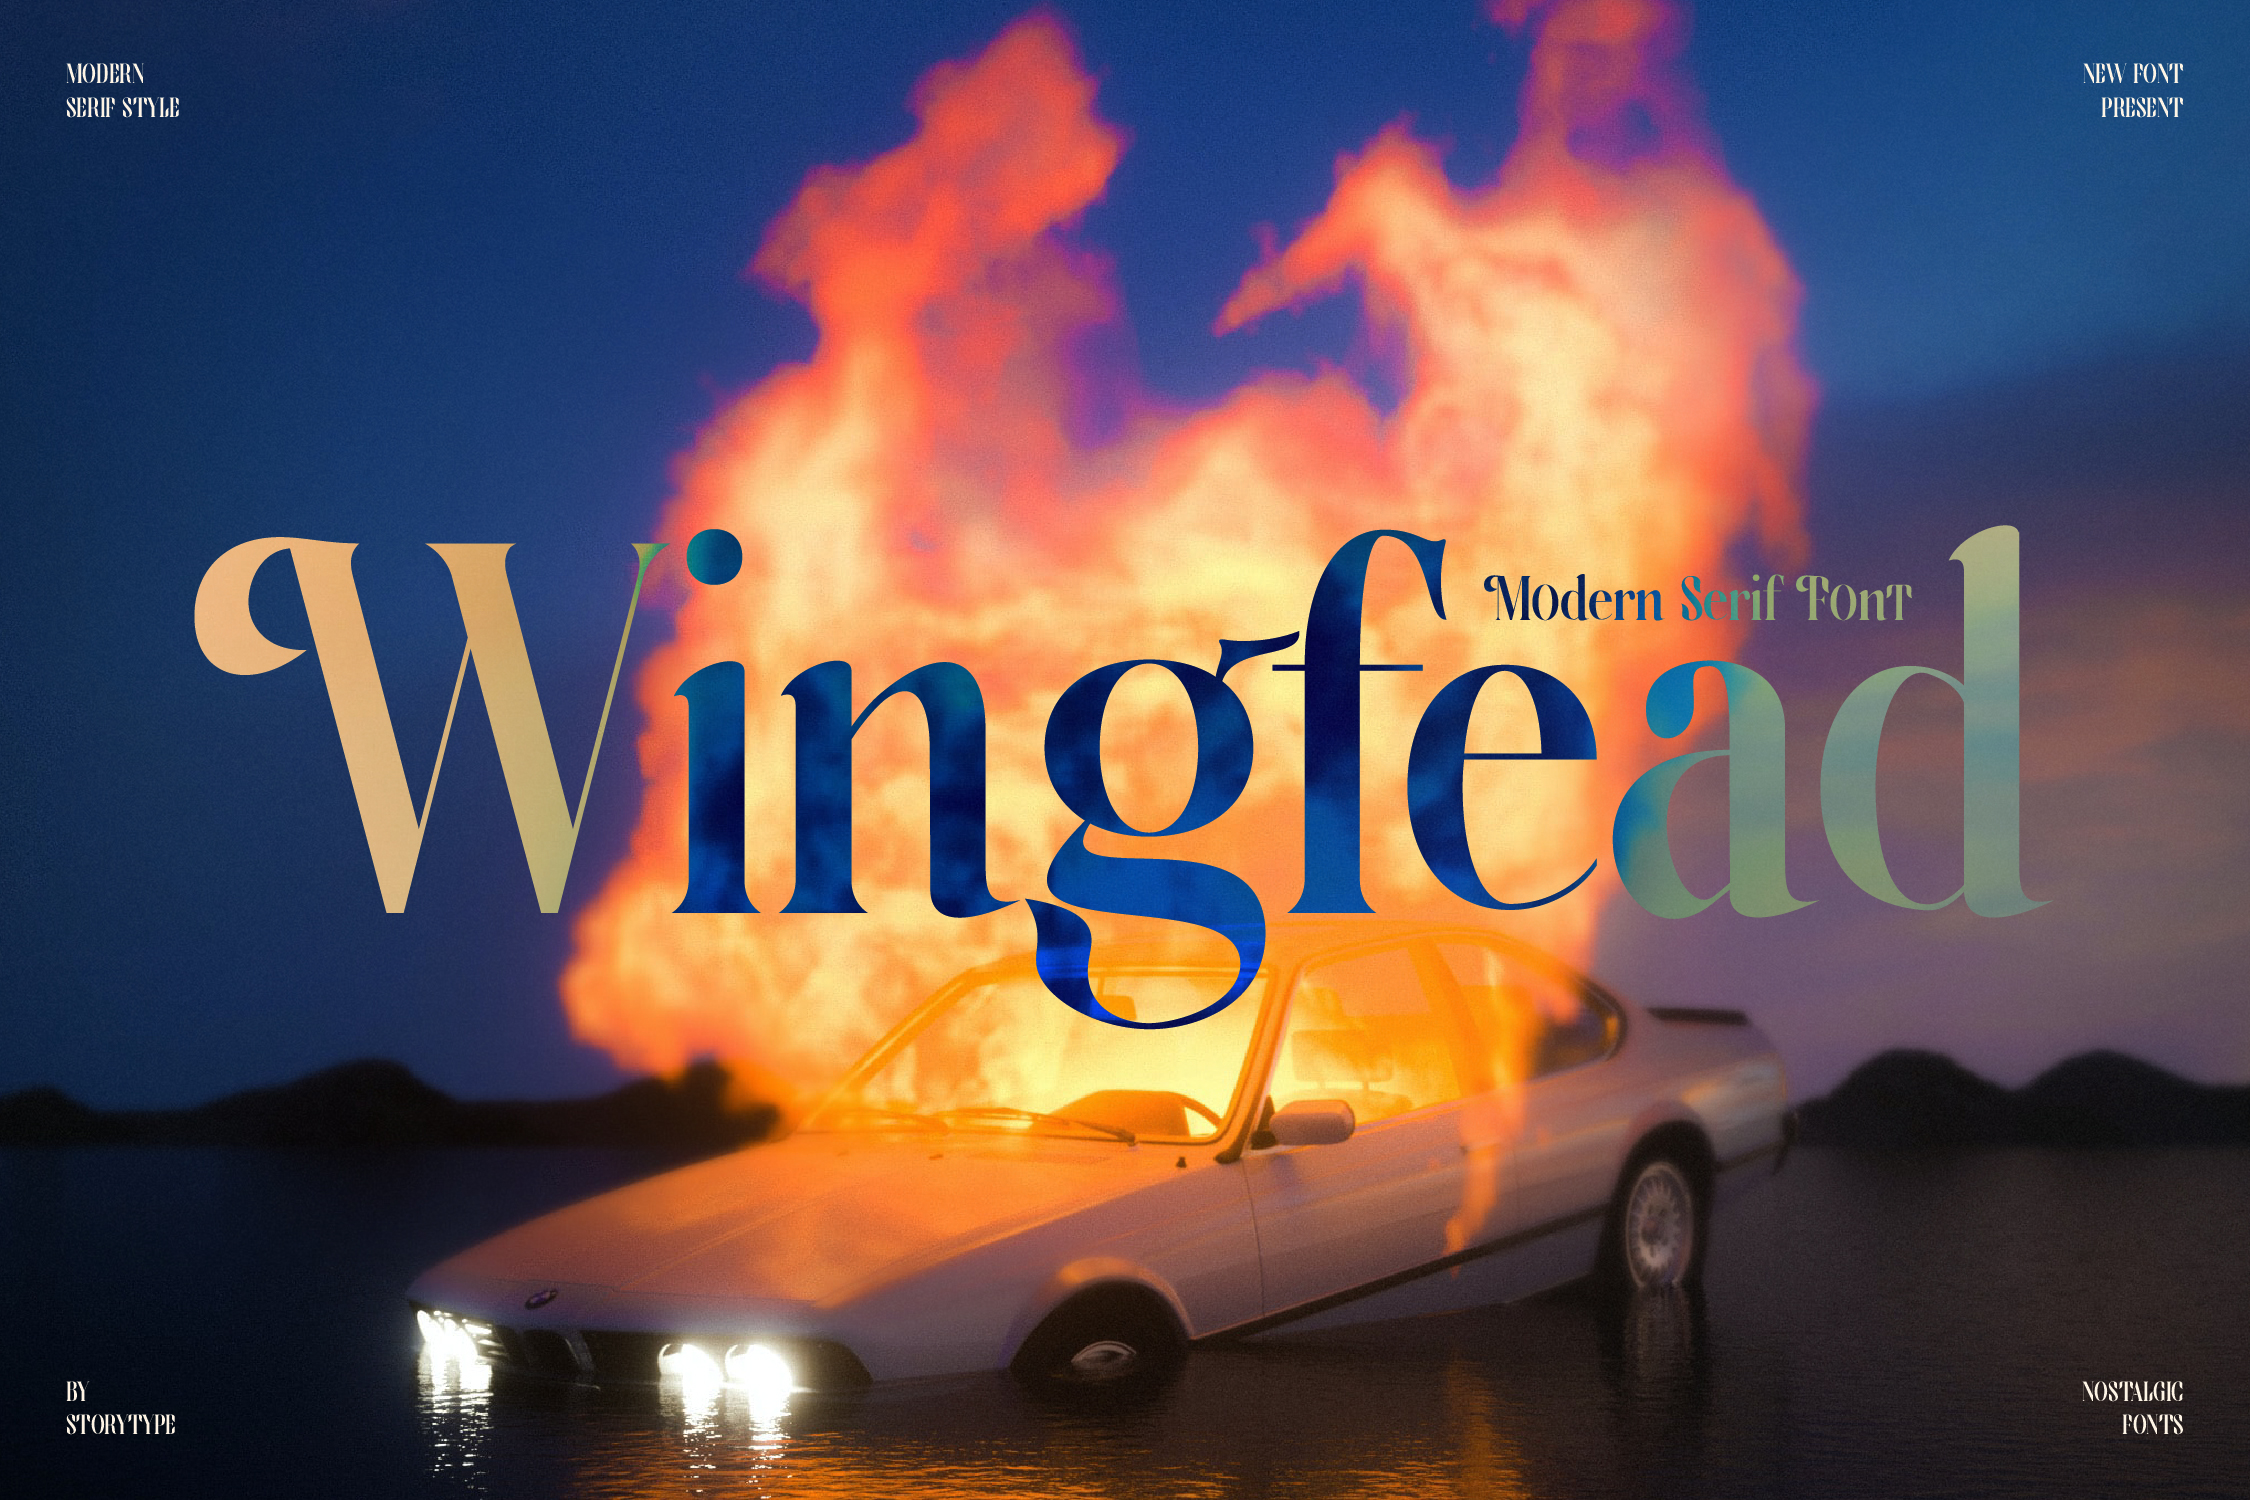 Wingfead